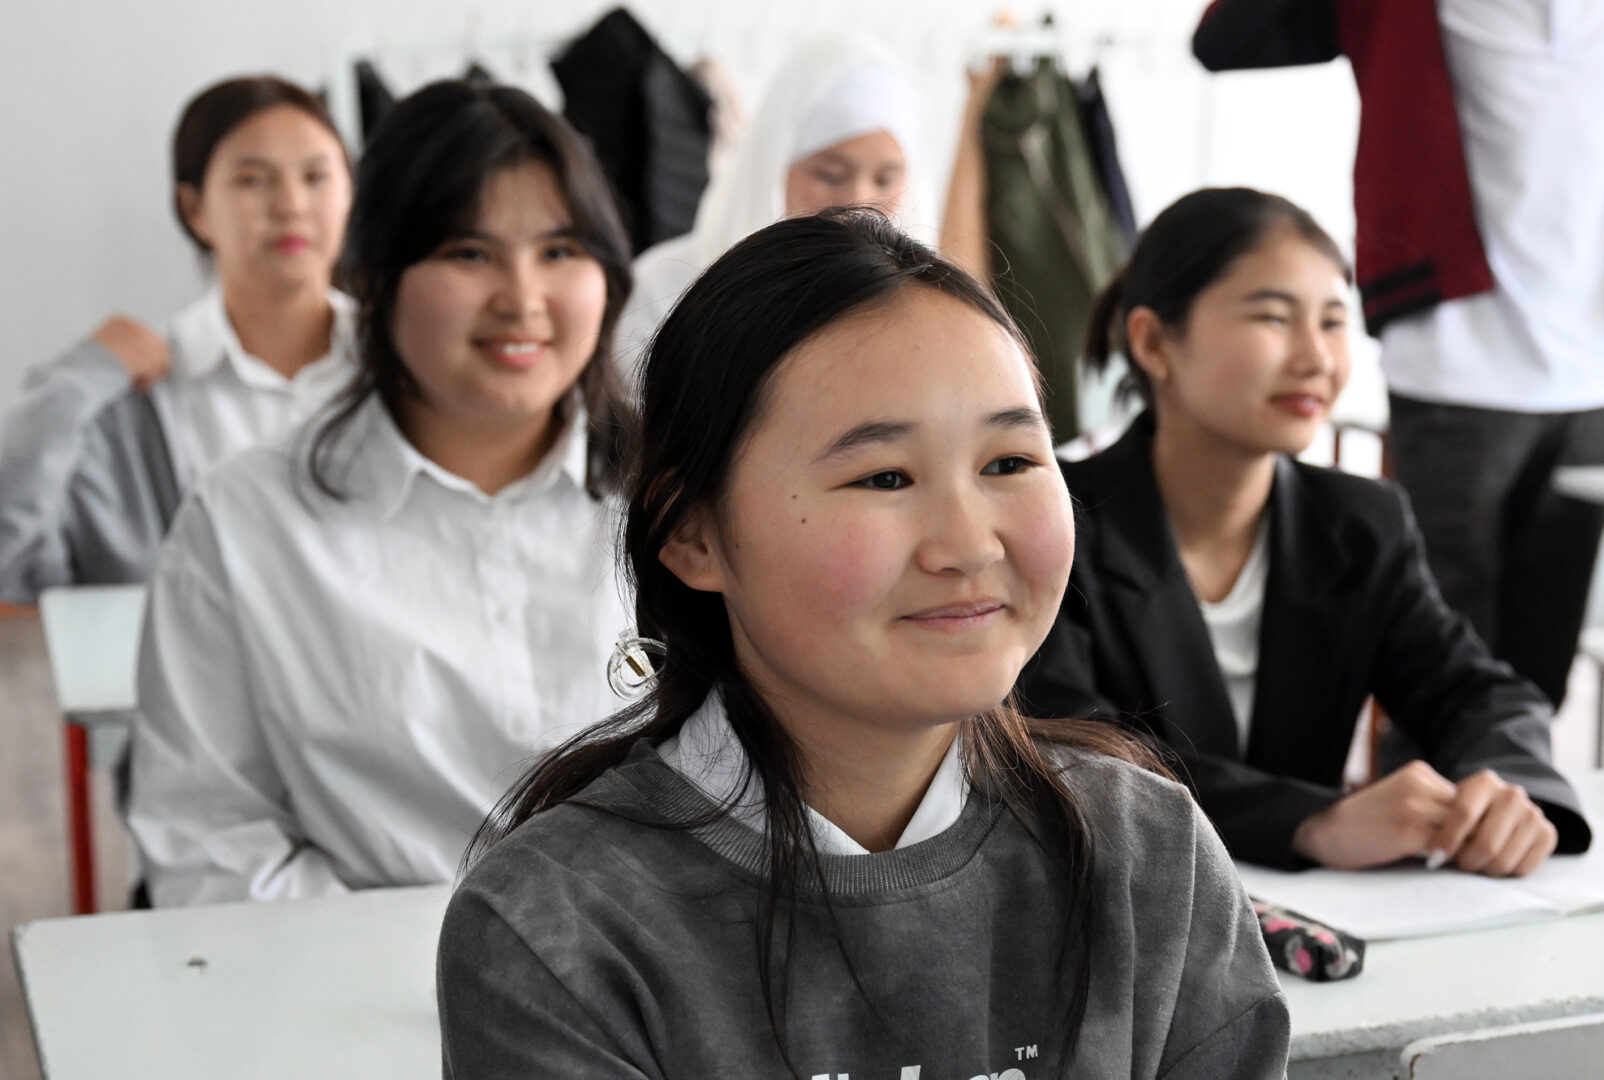 DOS 3541 Президент внепланово посетил одну из школ Бишкека и посидел на уроке - фото